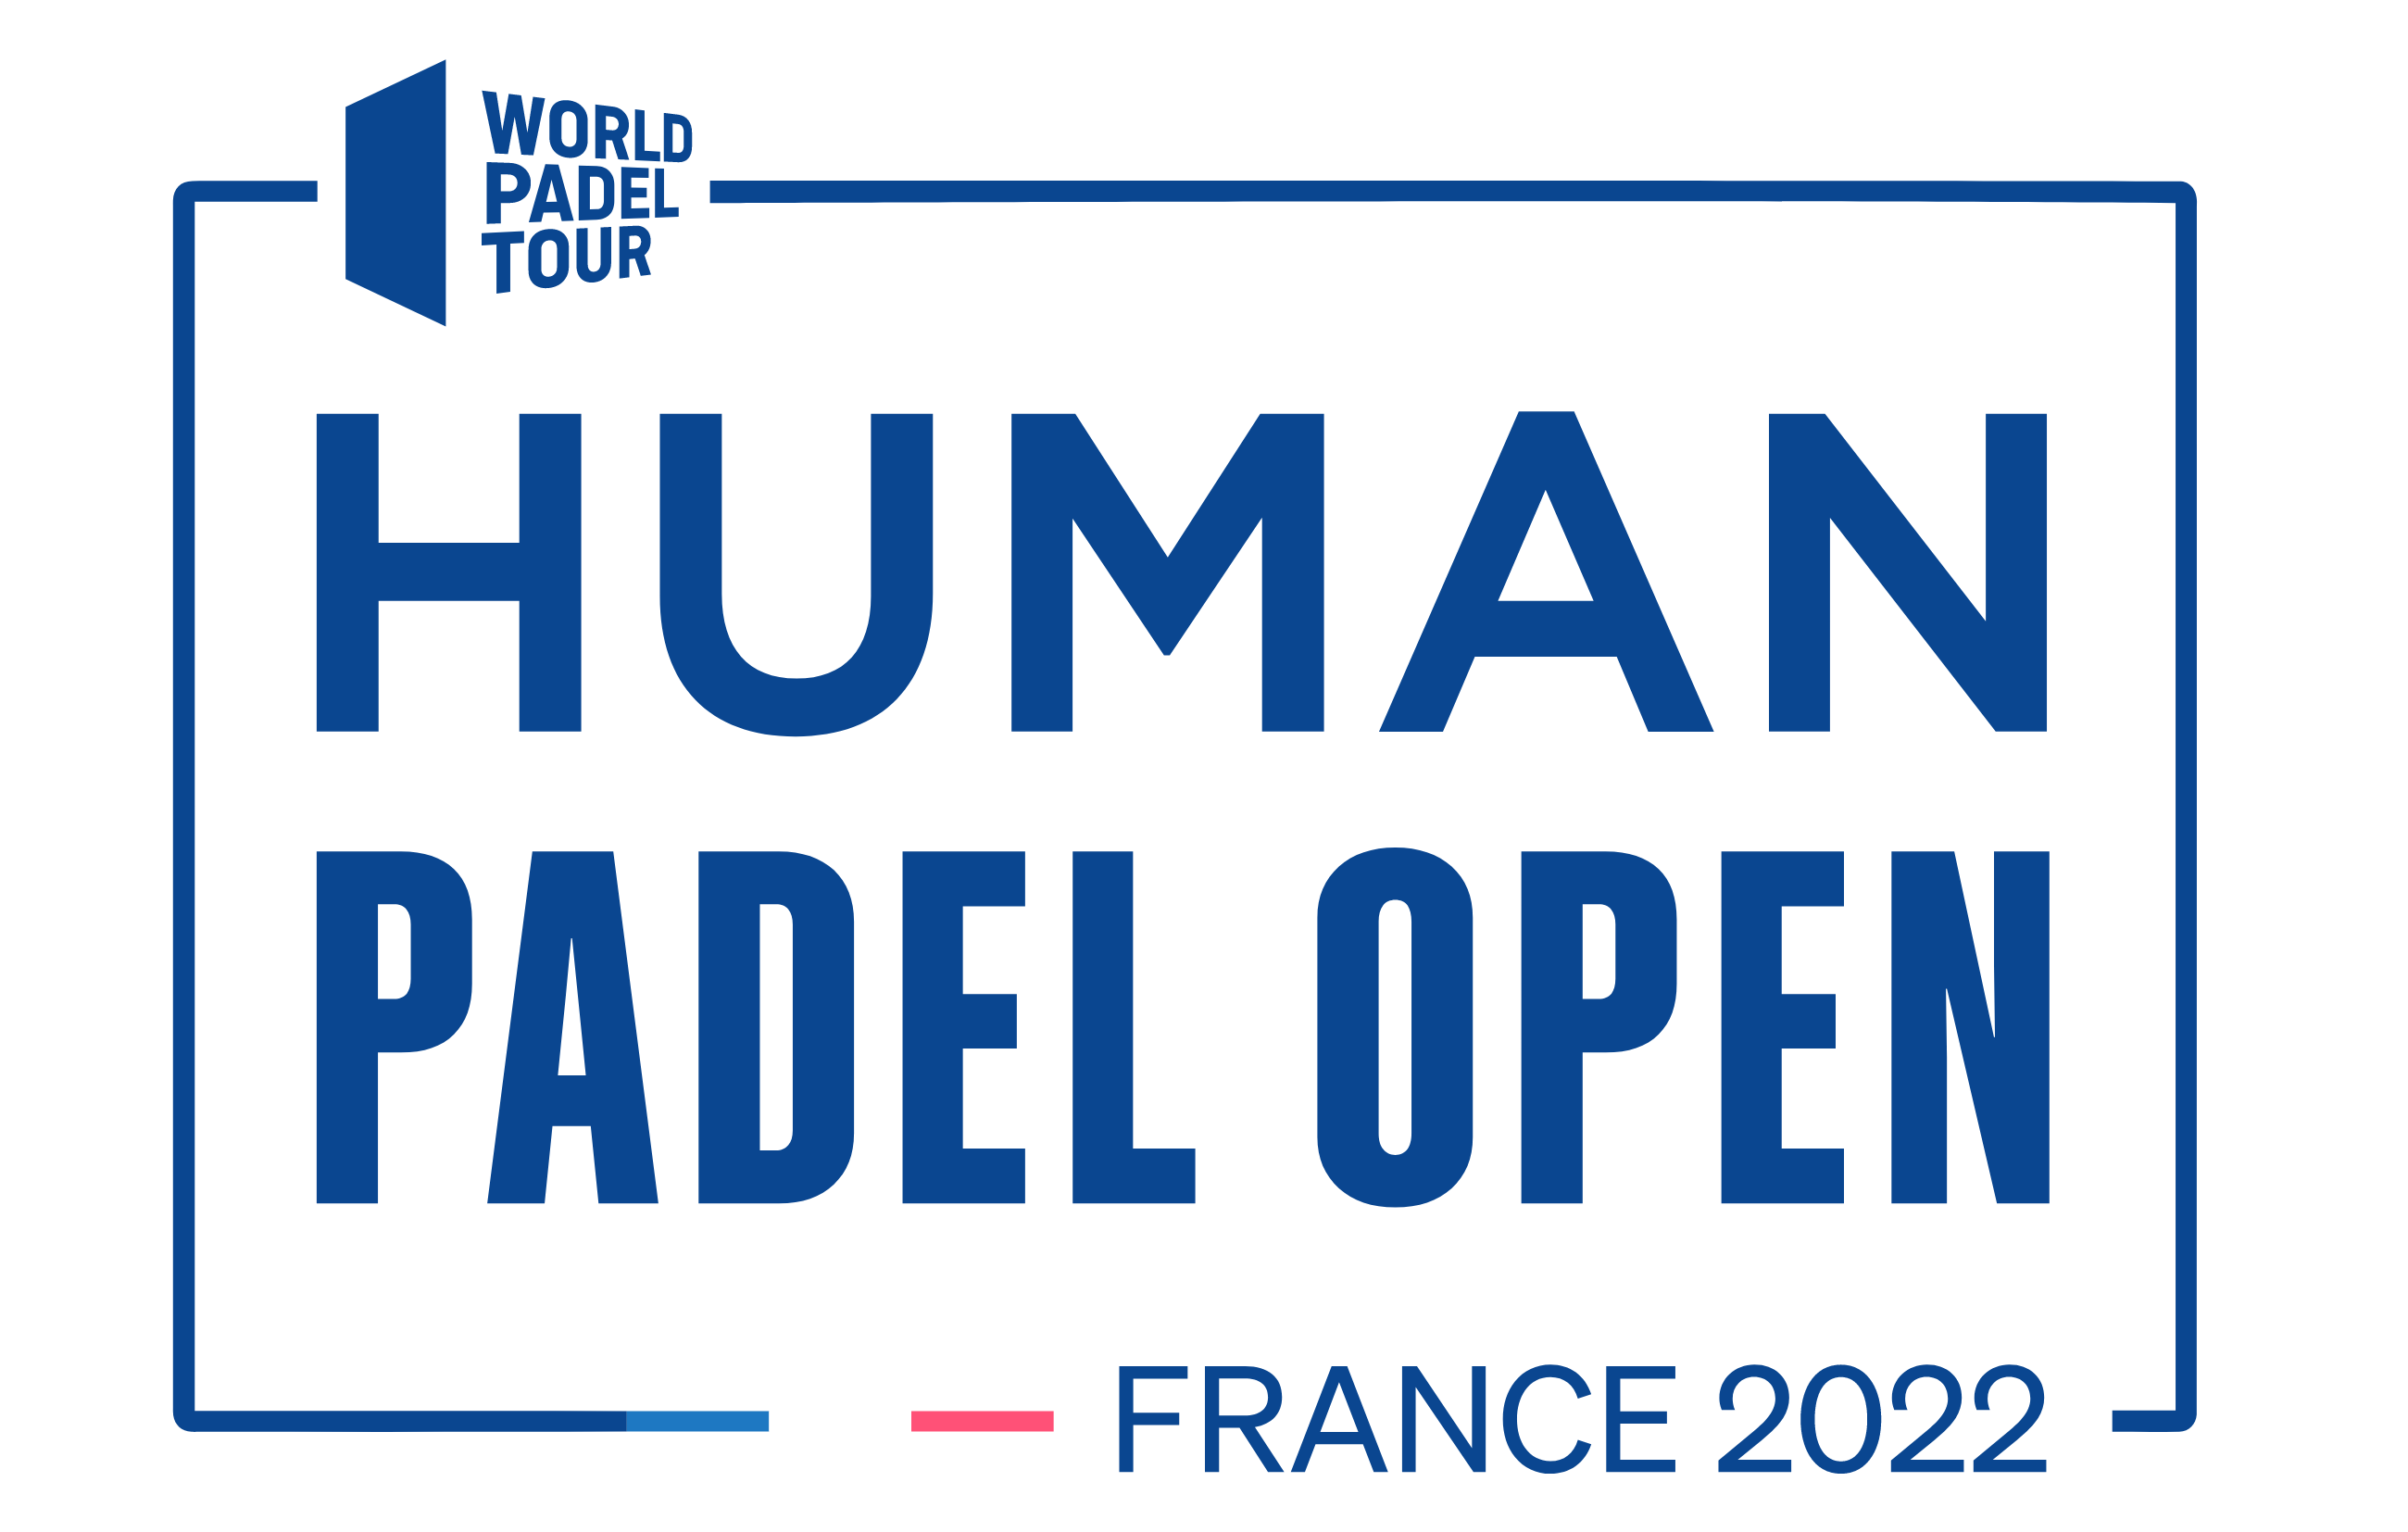 UMANO PADEL APERTO world padel tour logo